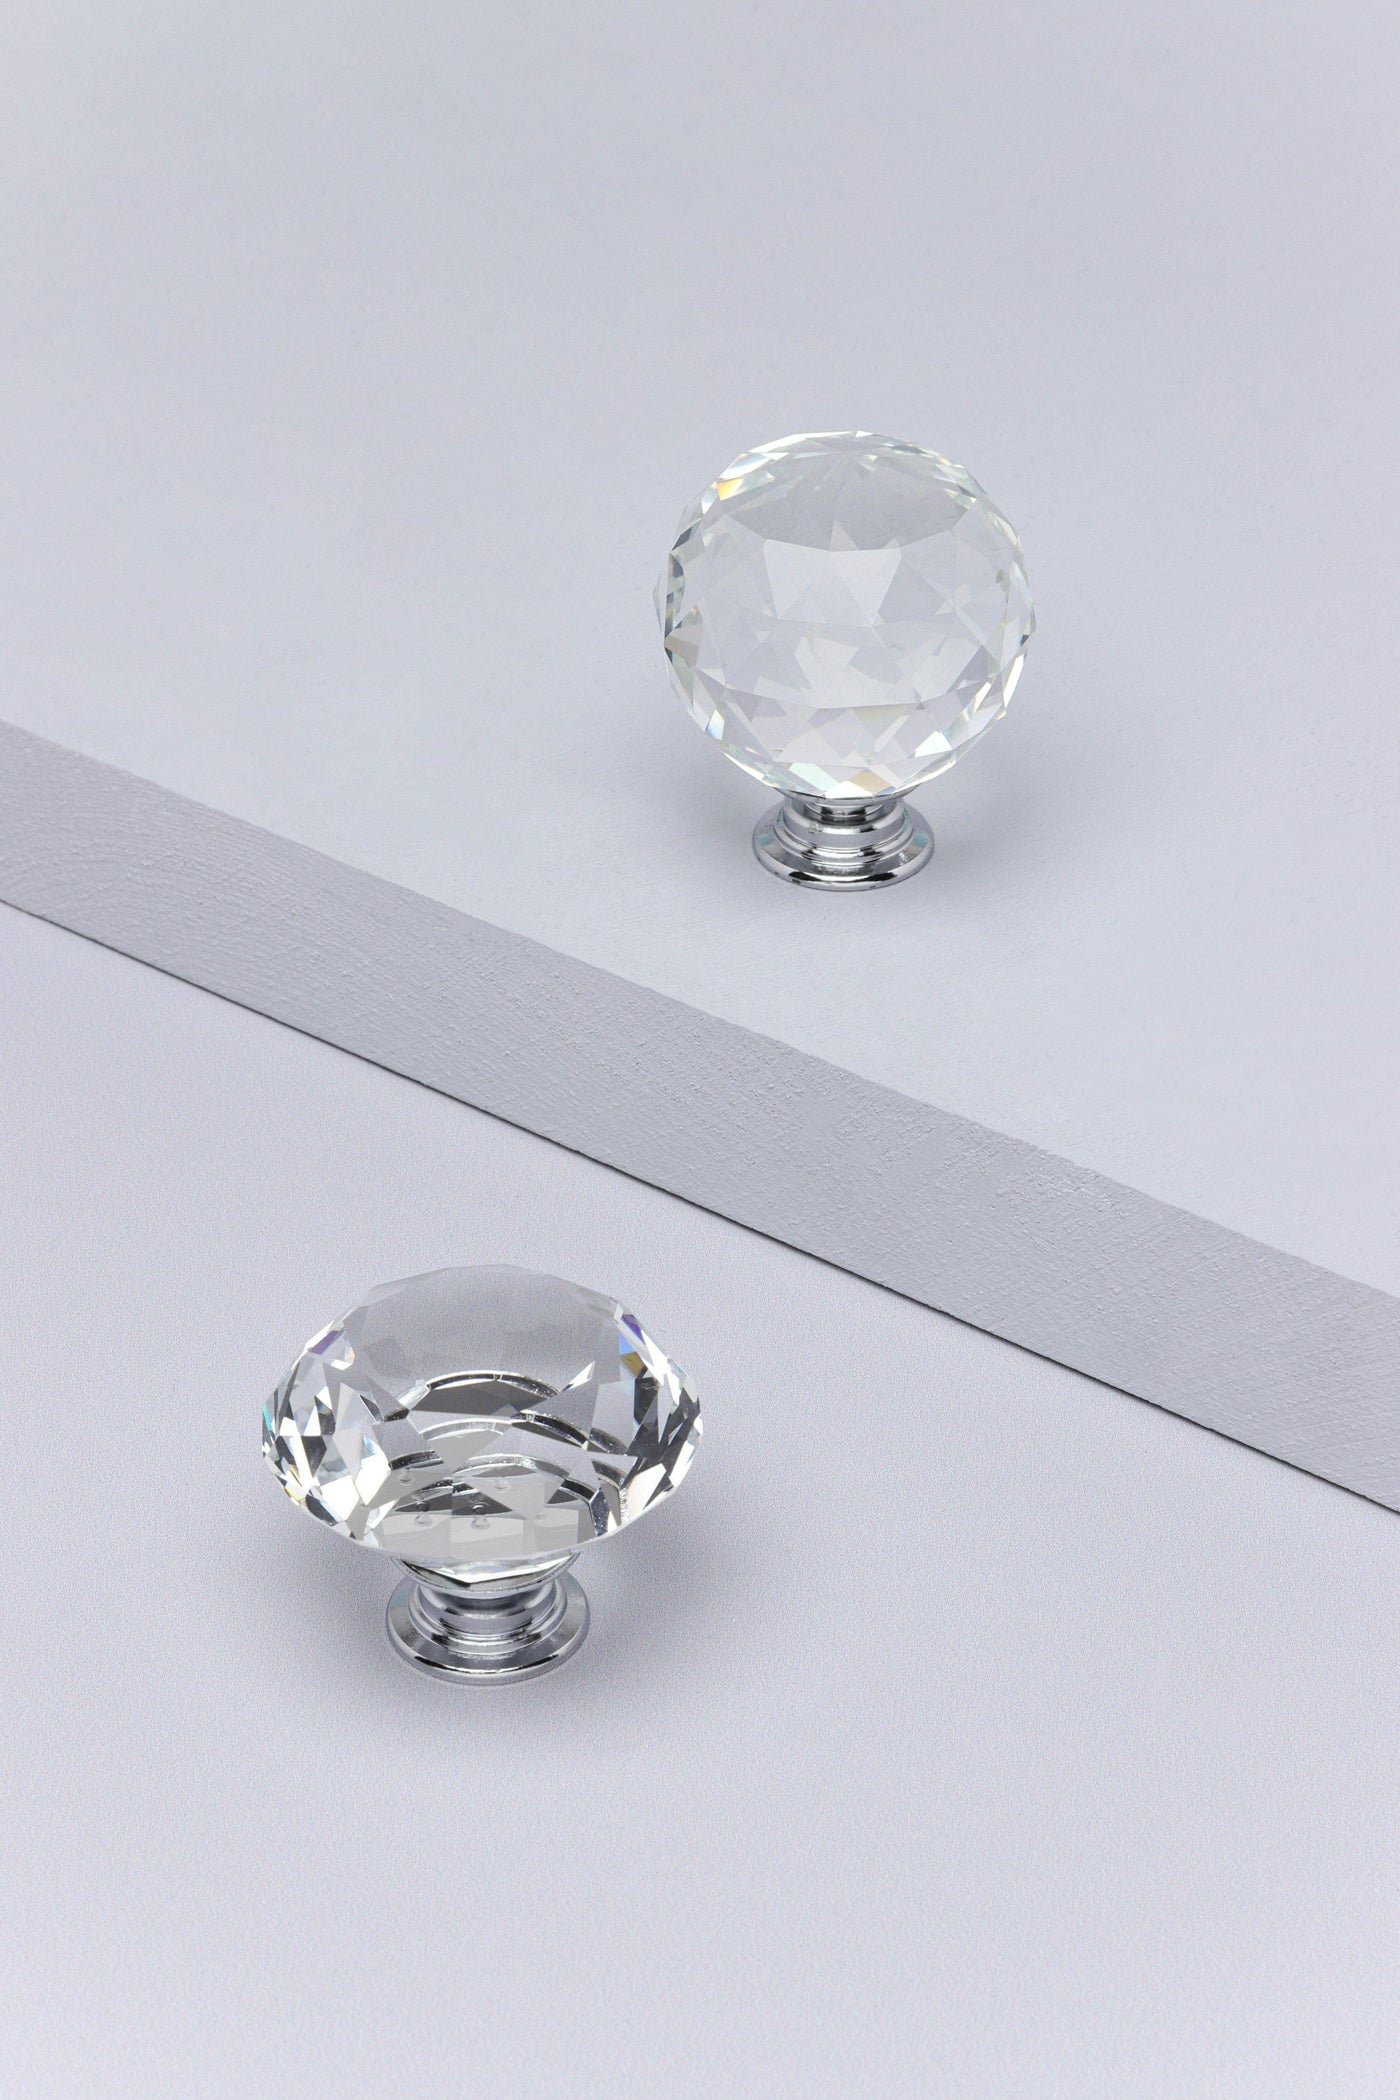 G Decor Door Knobs & Handles Crystal Glass Cupboard Knobs by G Decor